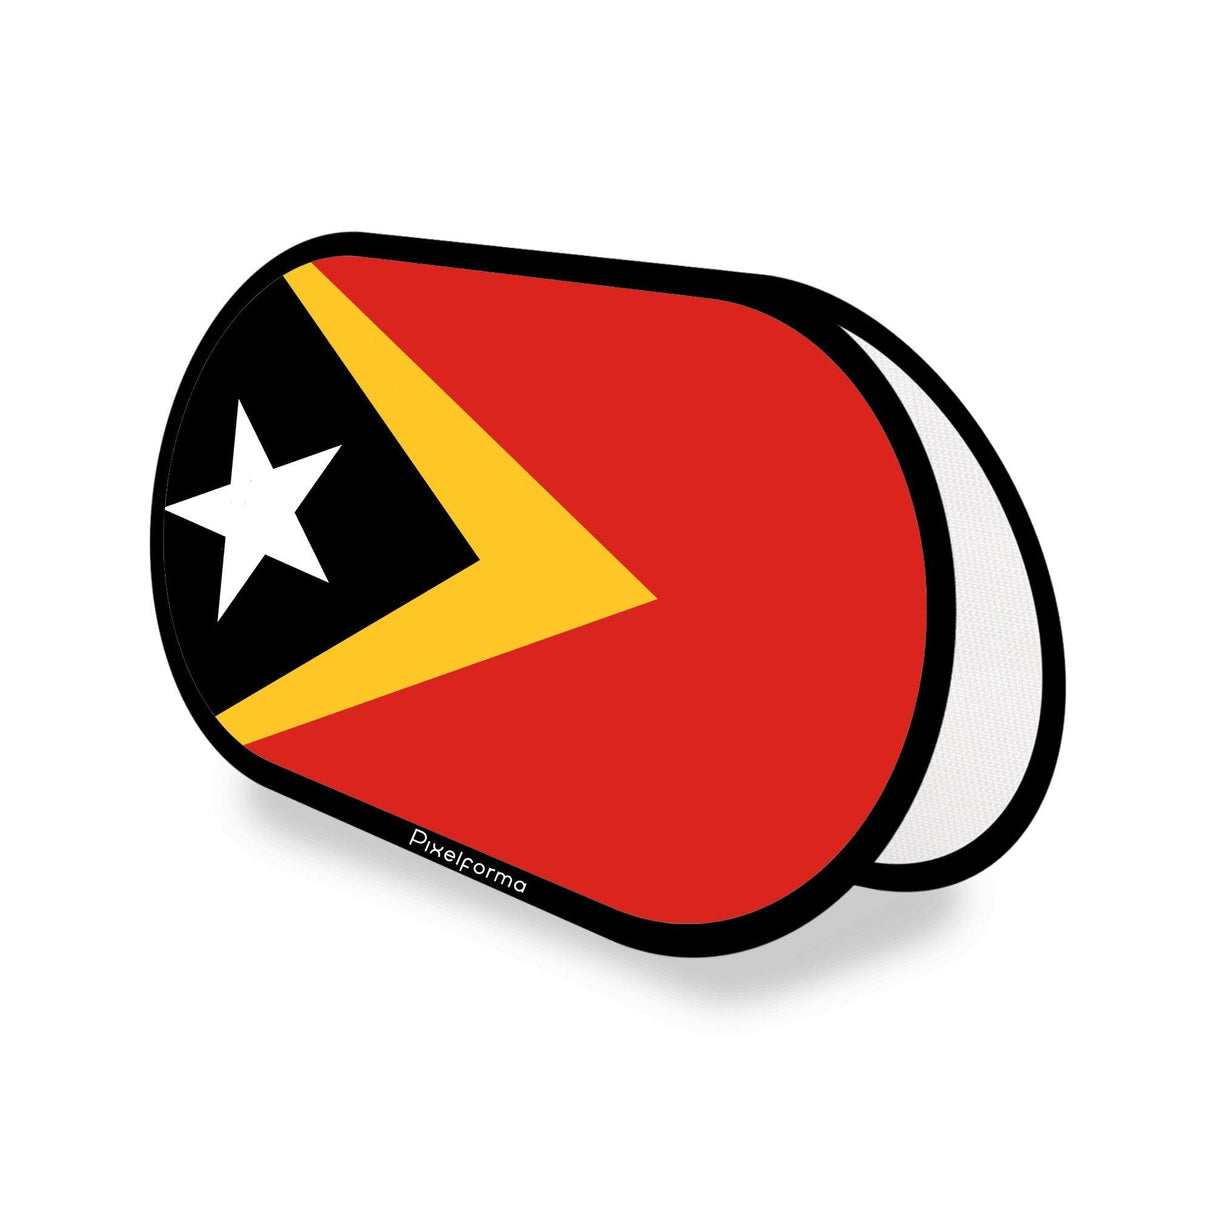 Support publicitaire ovale Drapeau du Timor oriental - Pixelforma 